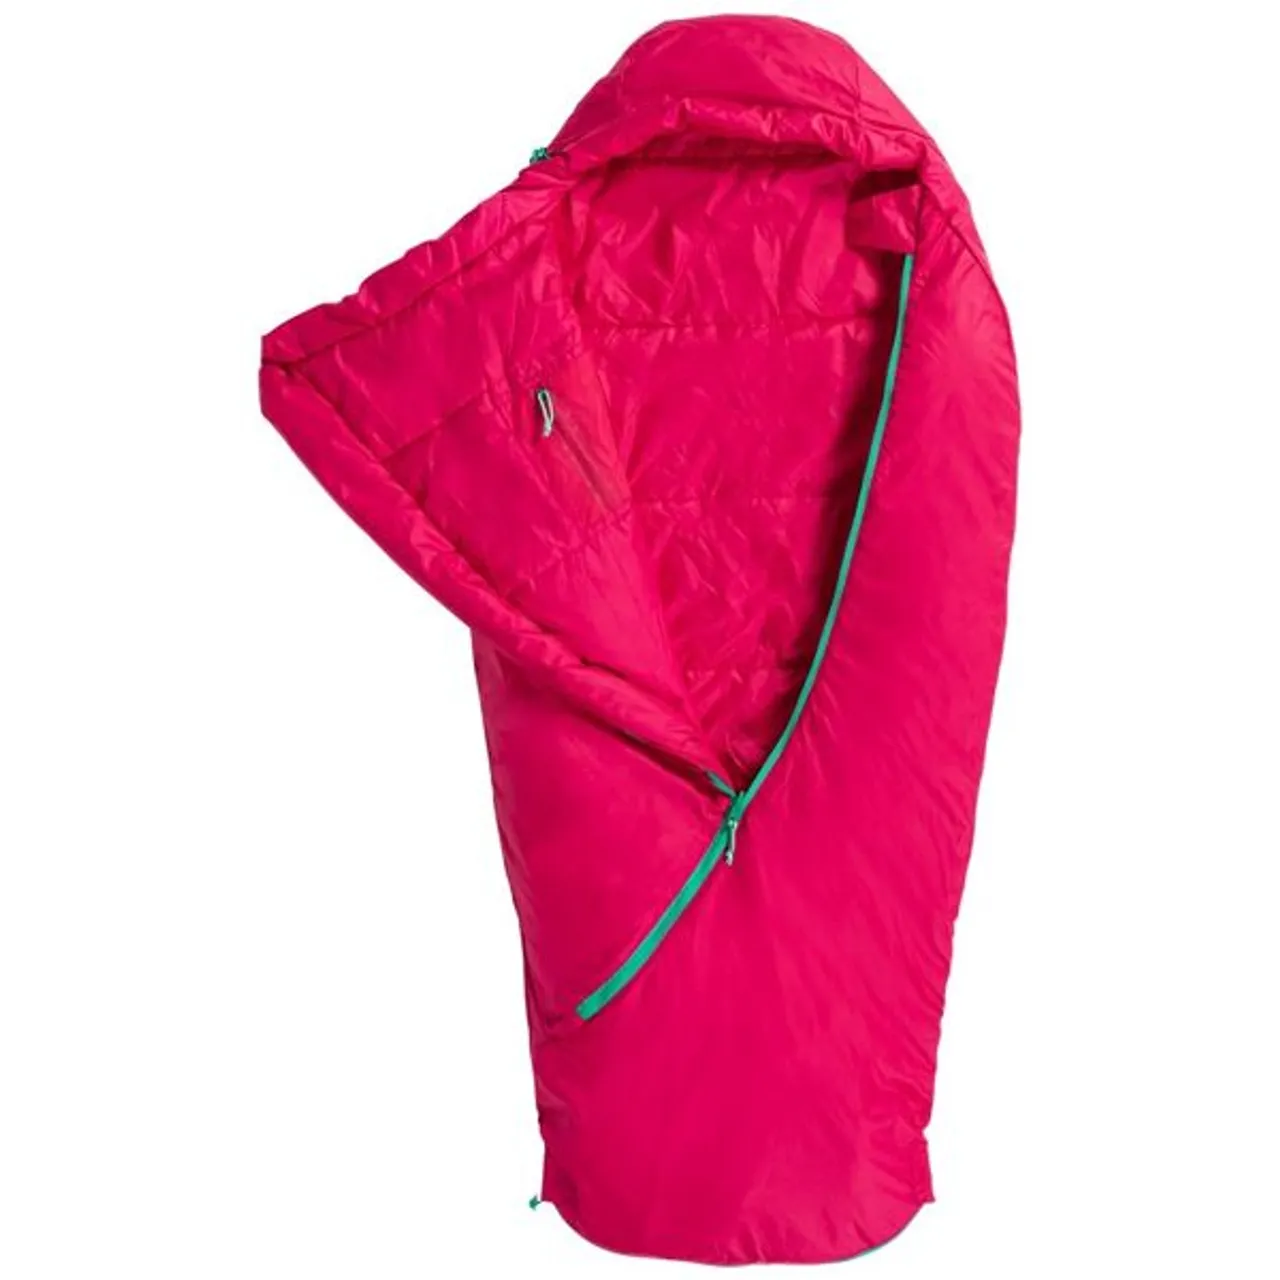 Kinderschlafsack JACK WOLFSKIN "GROW UP DREAMER" Schlafsäcke pink (pink, dahlia) Kinder Kinderschlafsäcke